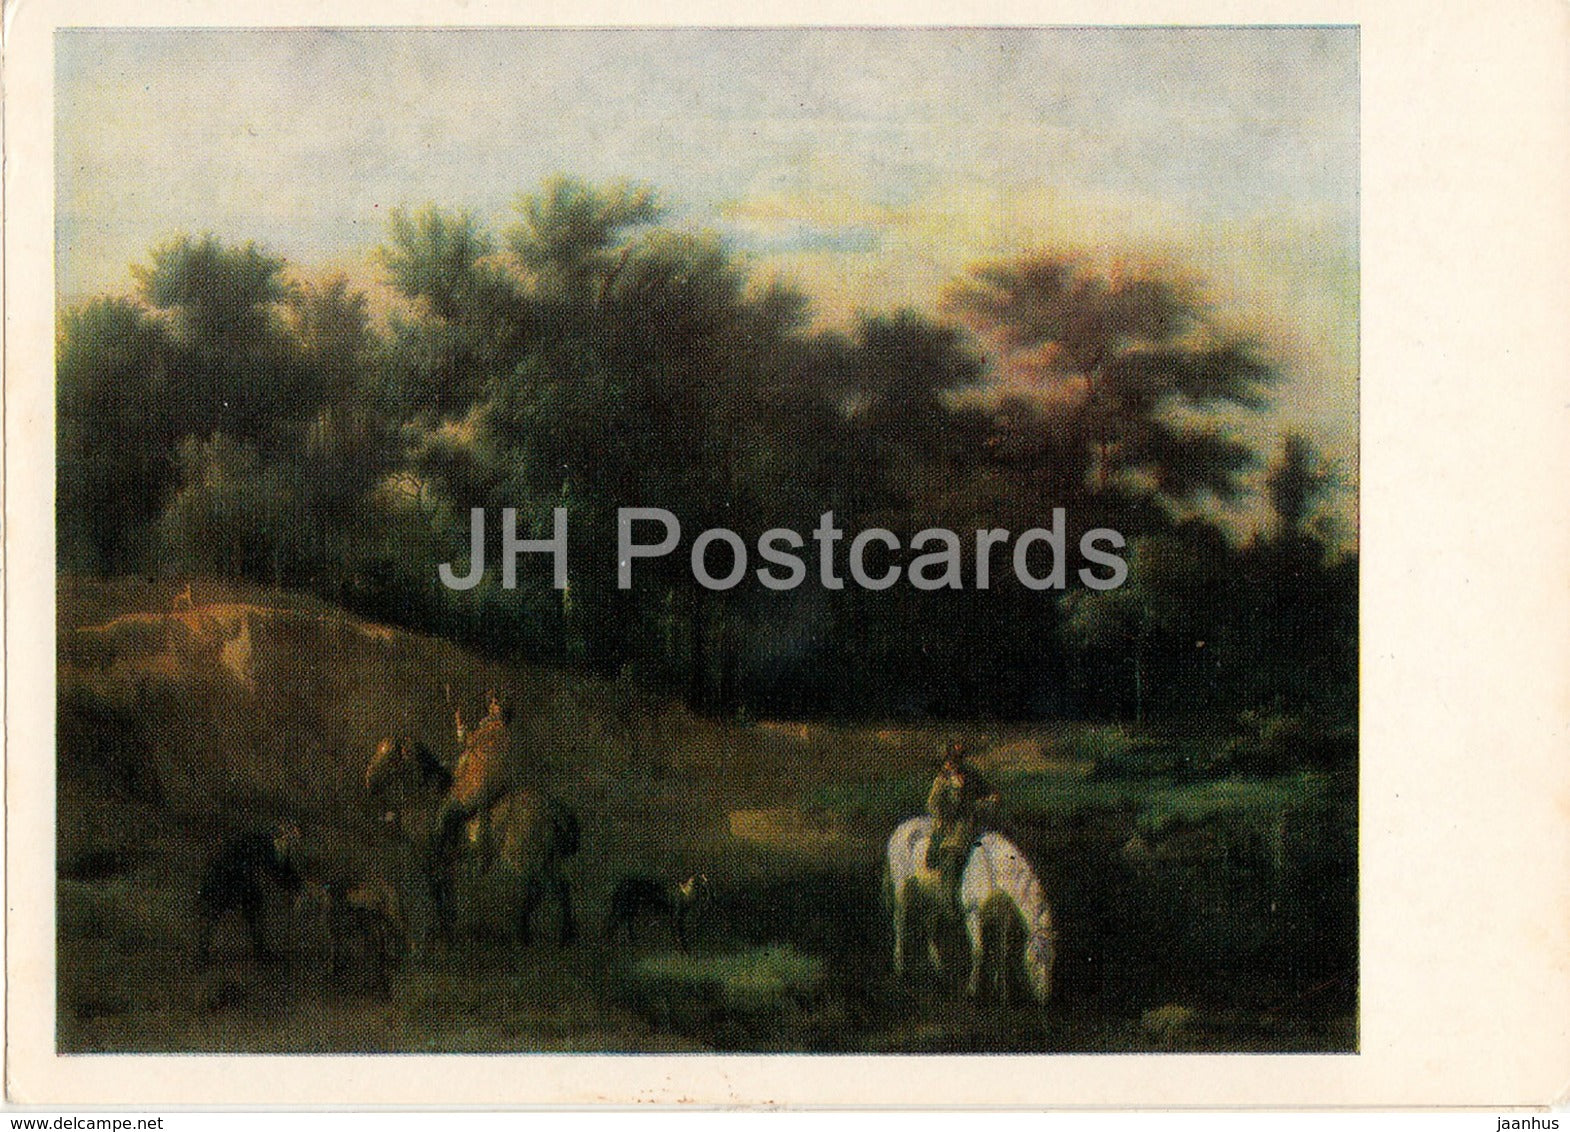 painting by Adriaen van de Velde - Landscape - horses - Dutch art - 1985 - Russia USSR - unused - JH Postcards